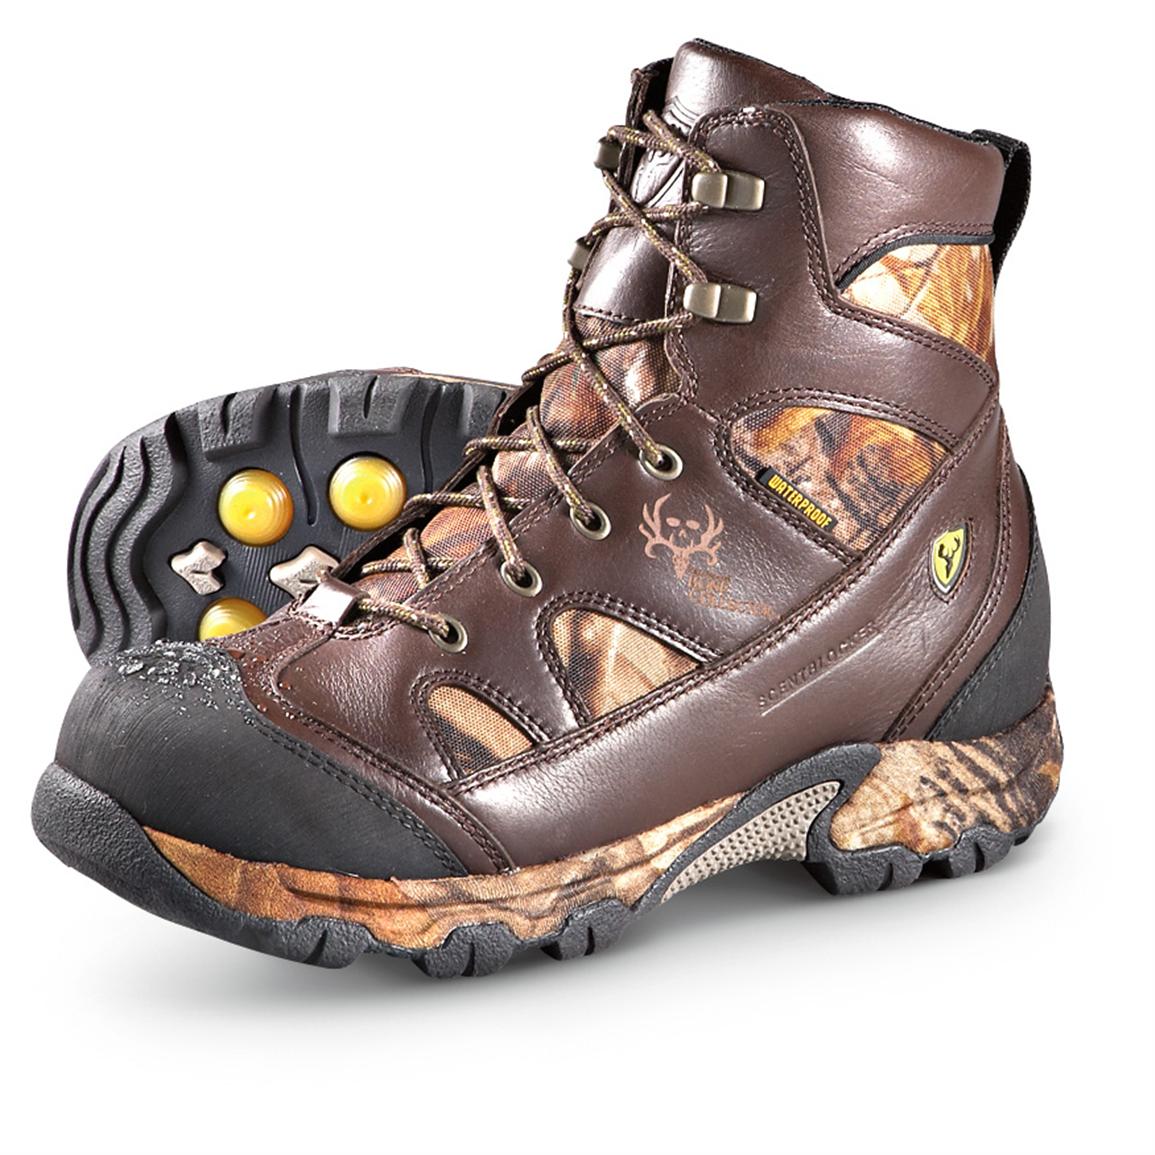 Waterproof Hiking Boots, Realtree 